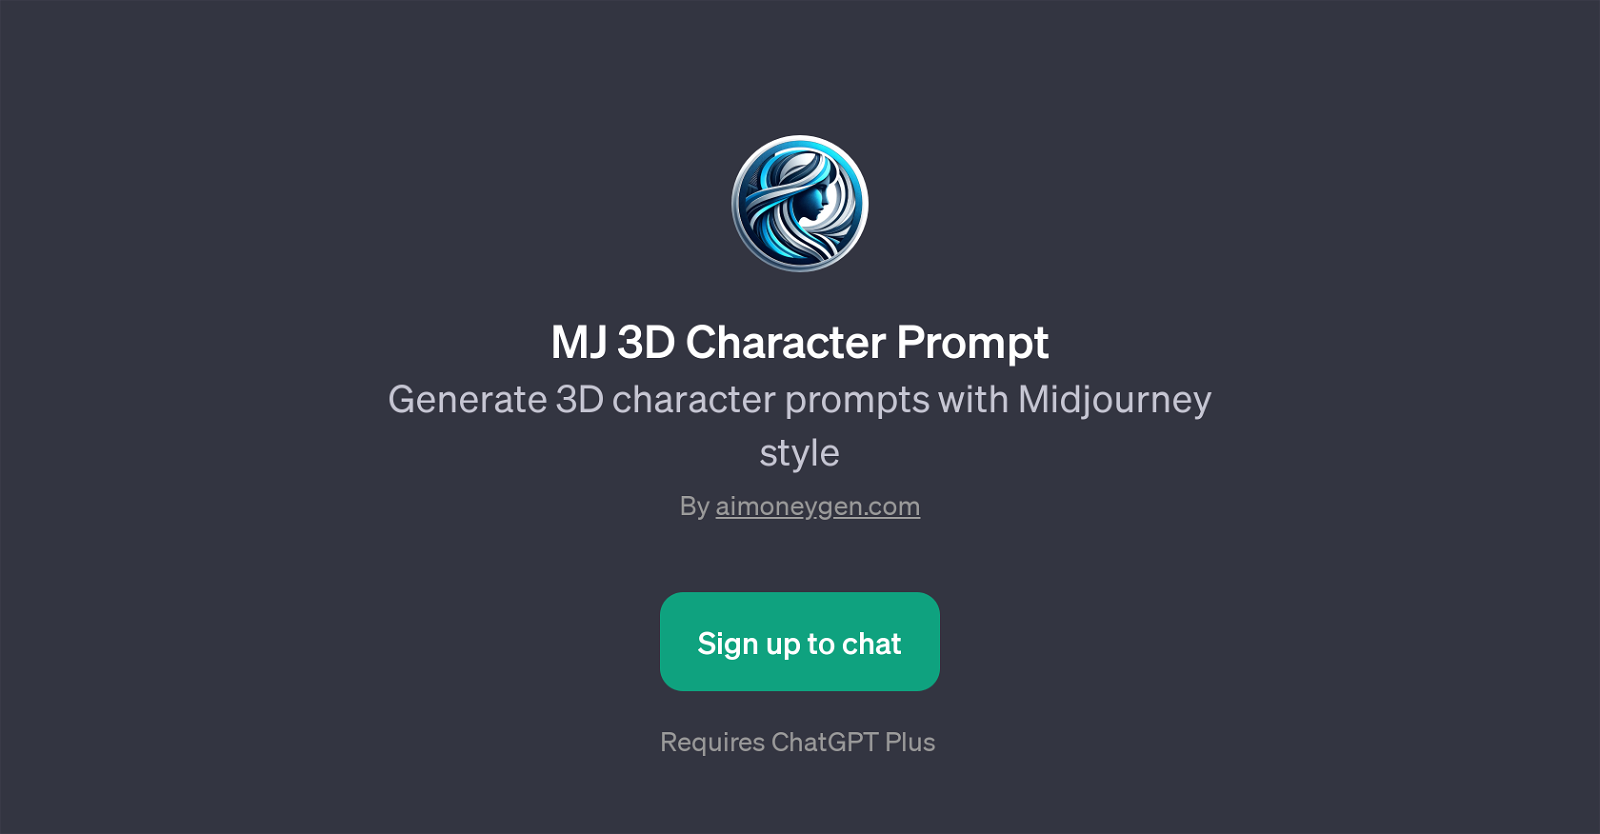 MJ 3D Character Prompt website